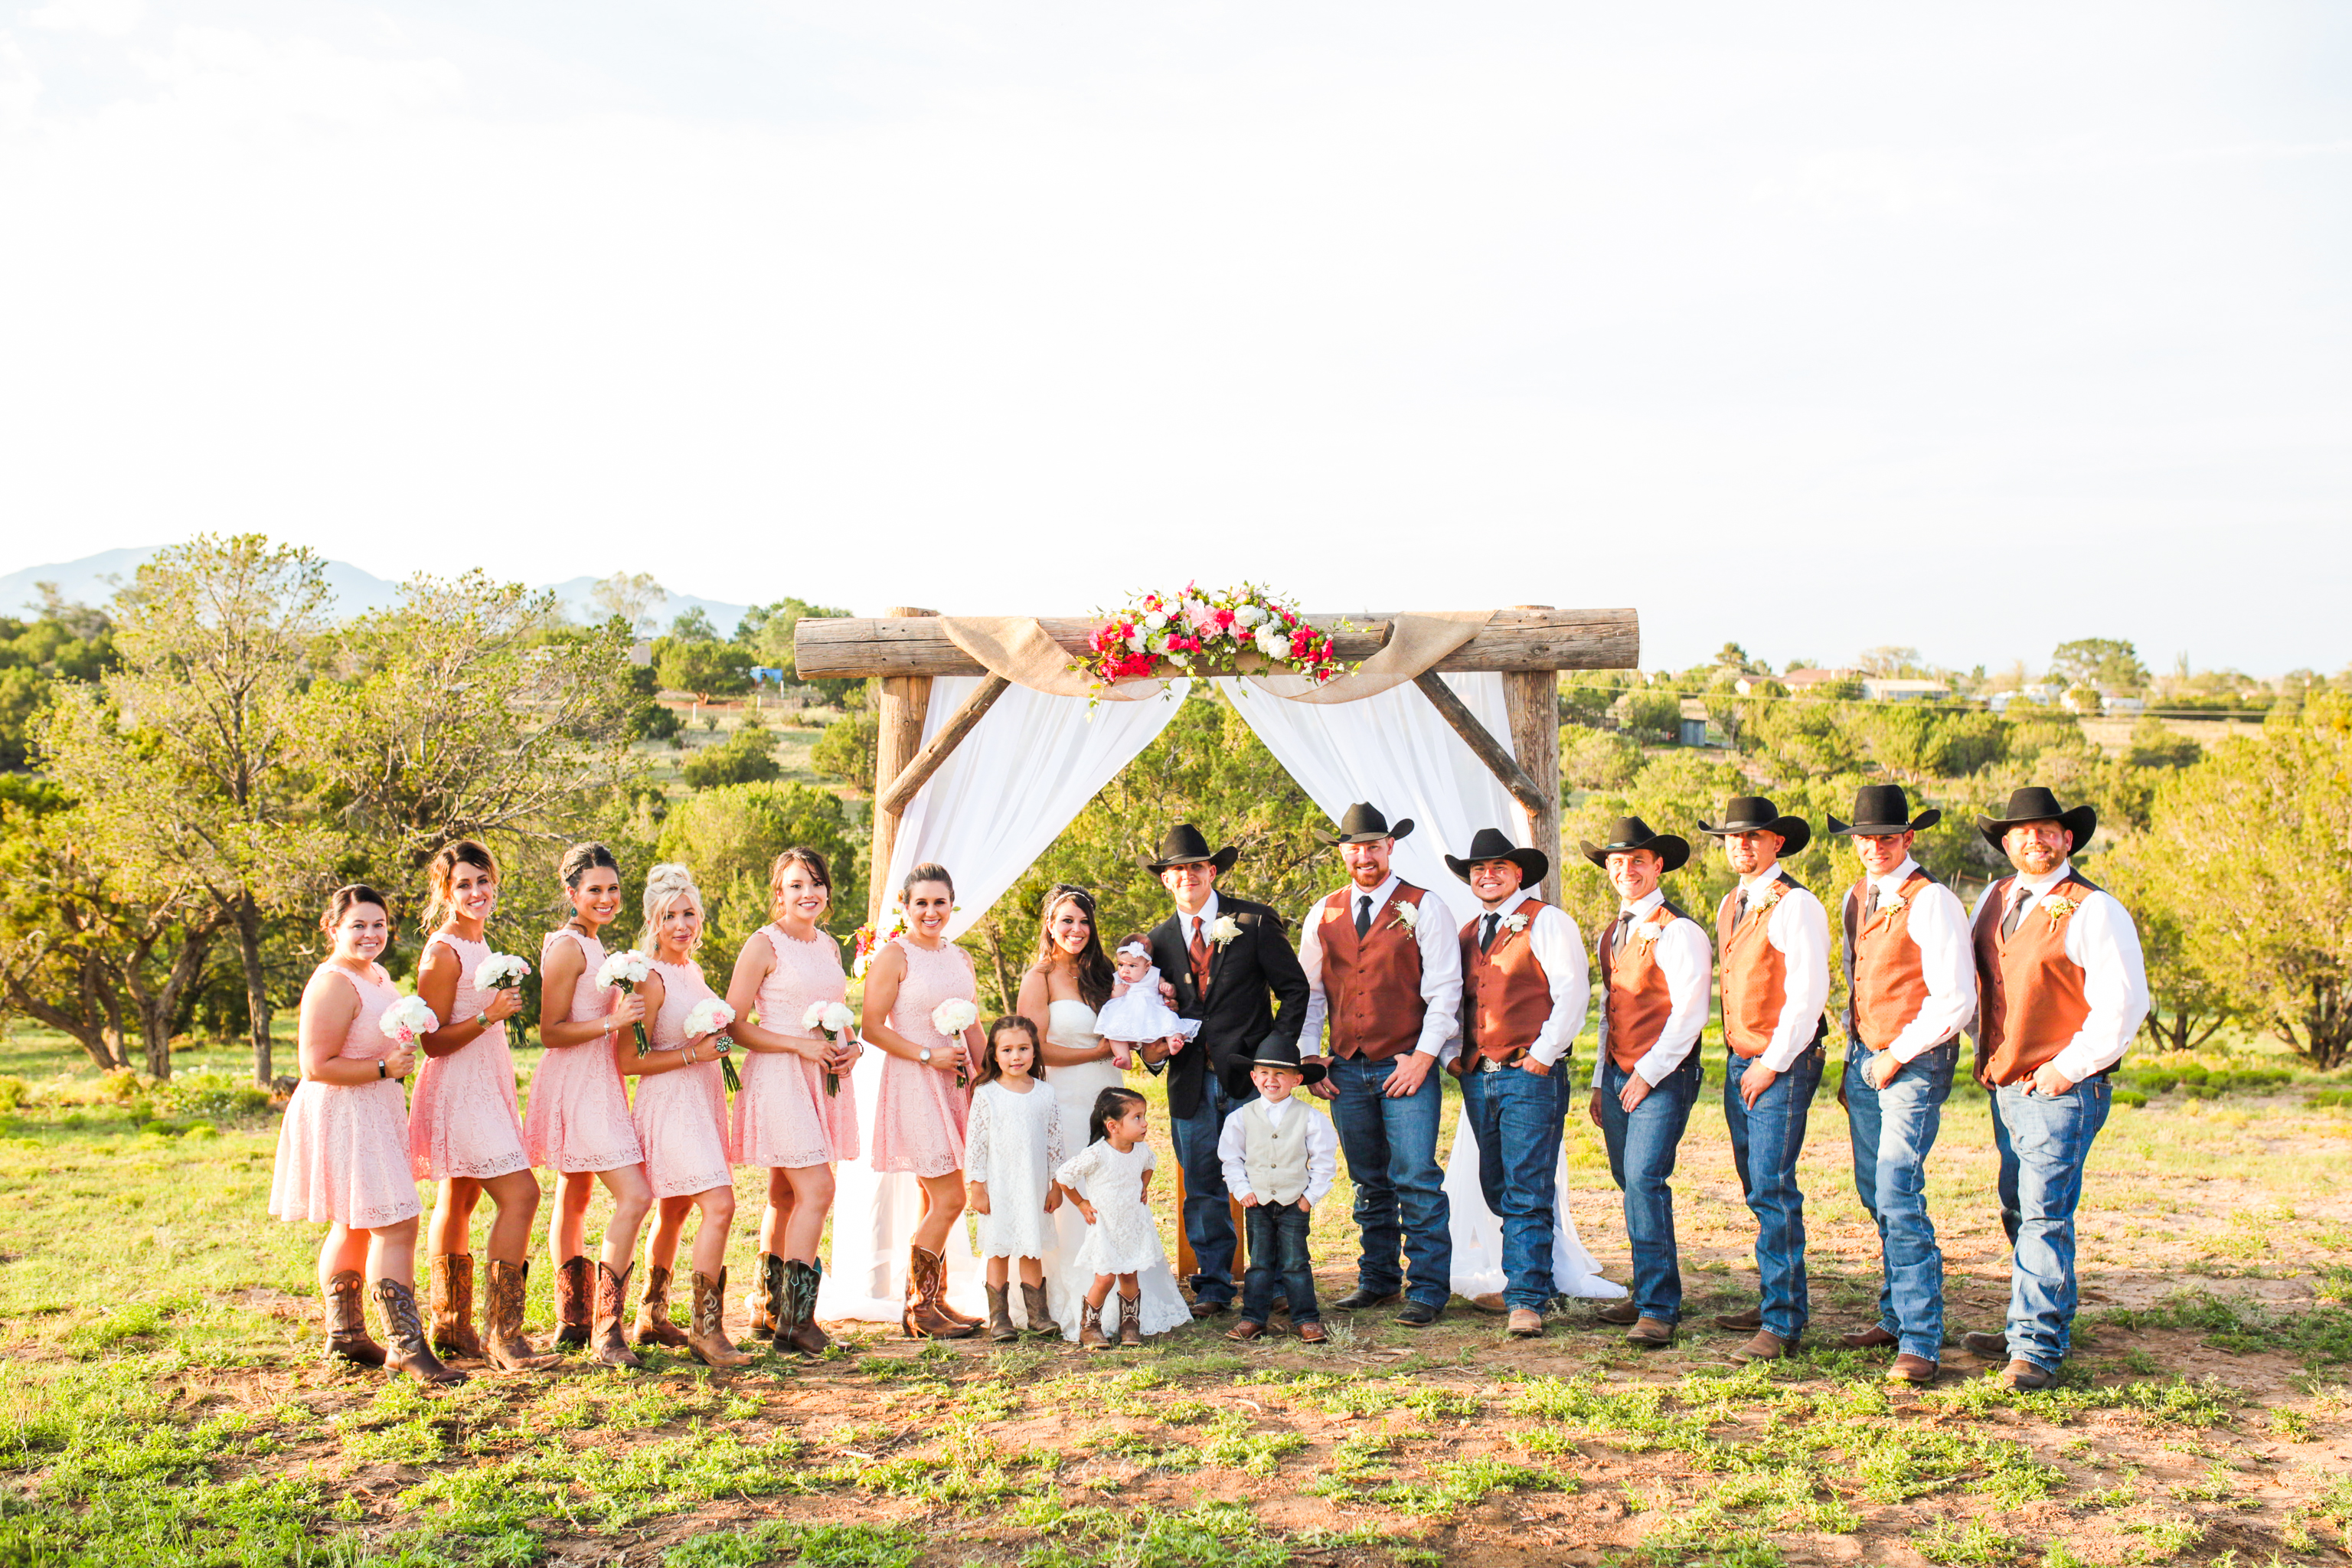 Edgewood New Mexico_Country Wedding Photographer_www.tylerbrooke.com_Kate Kauffman (21 of 35)